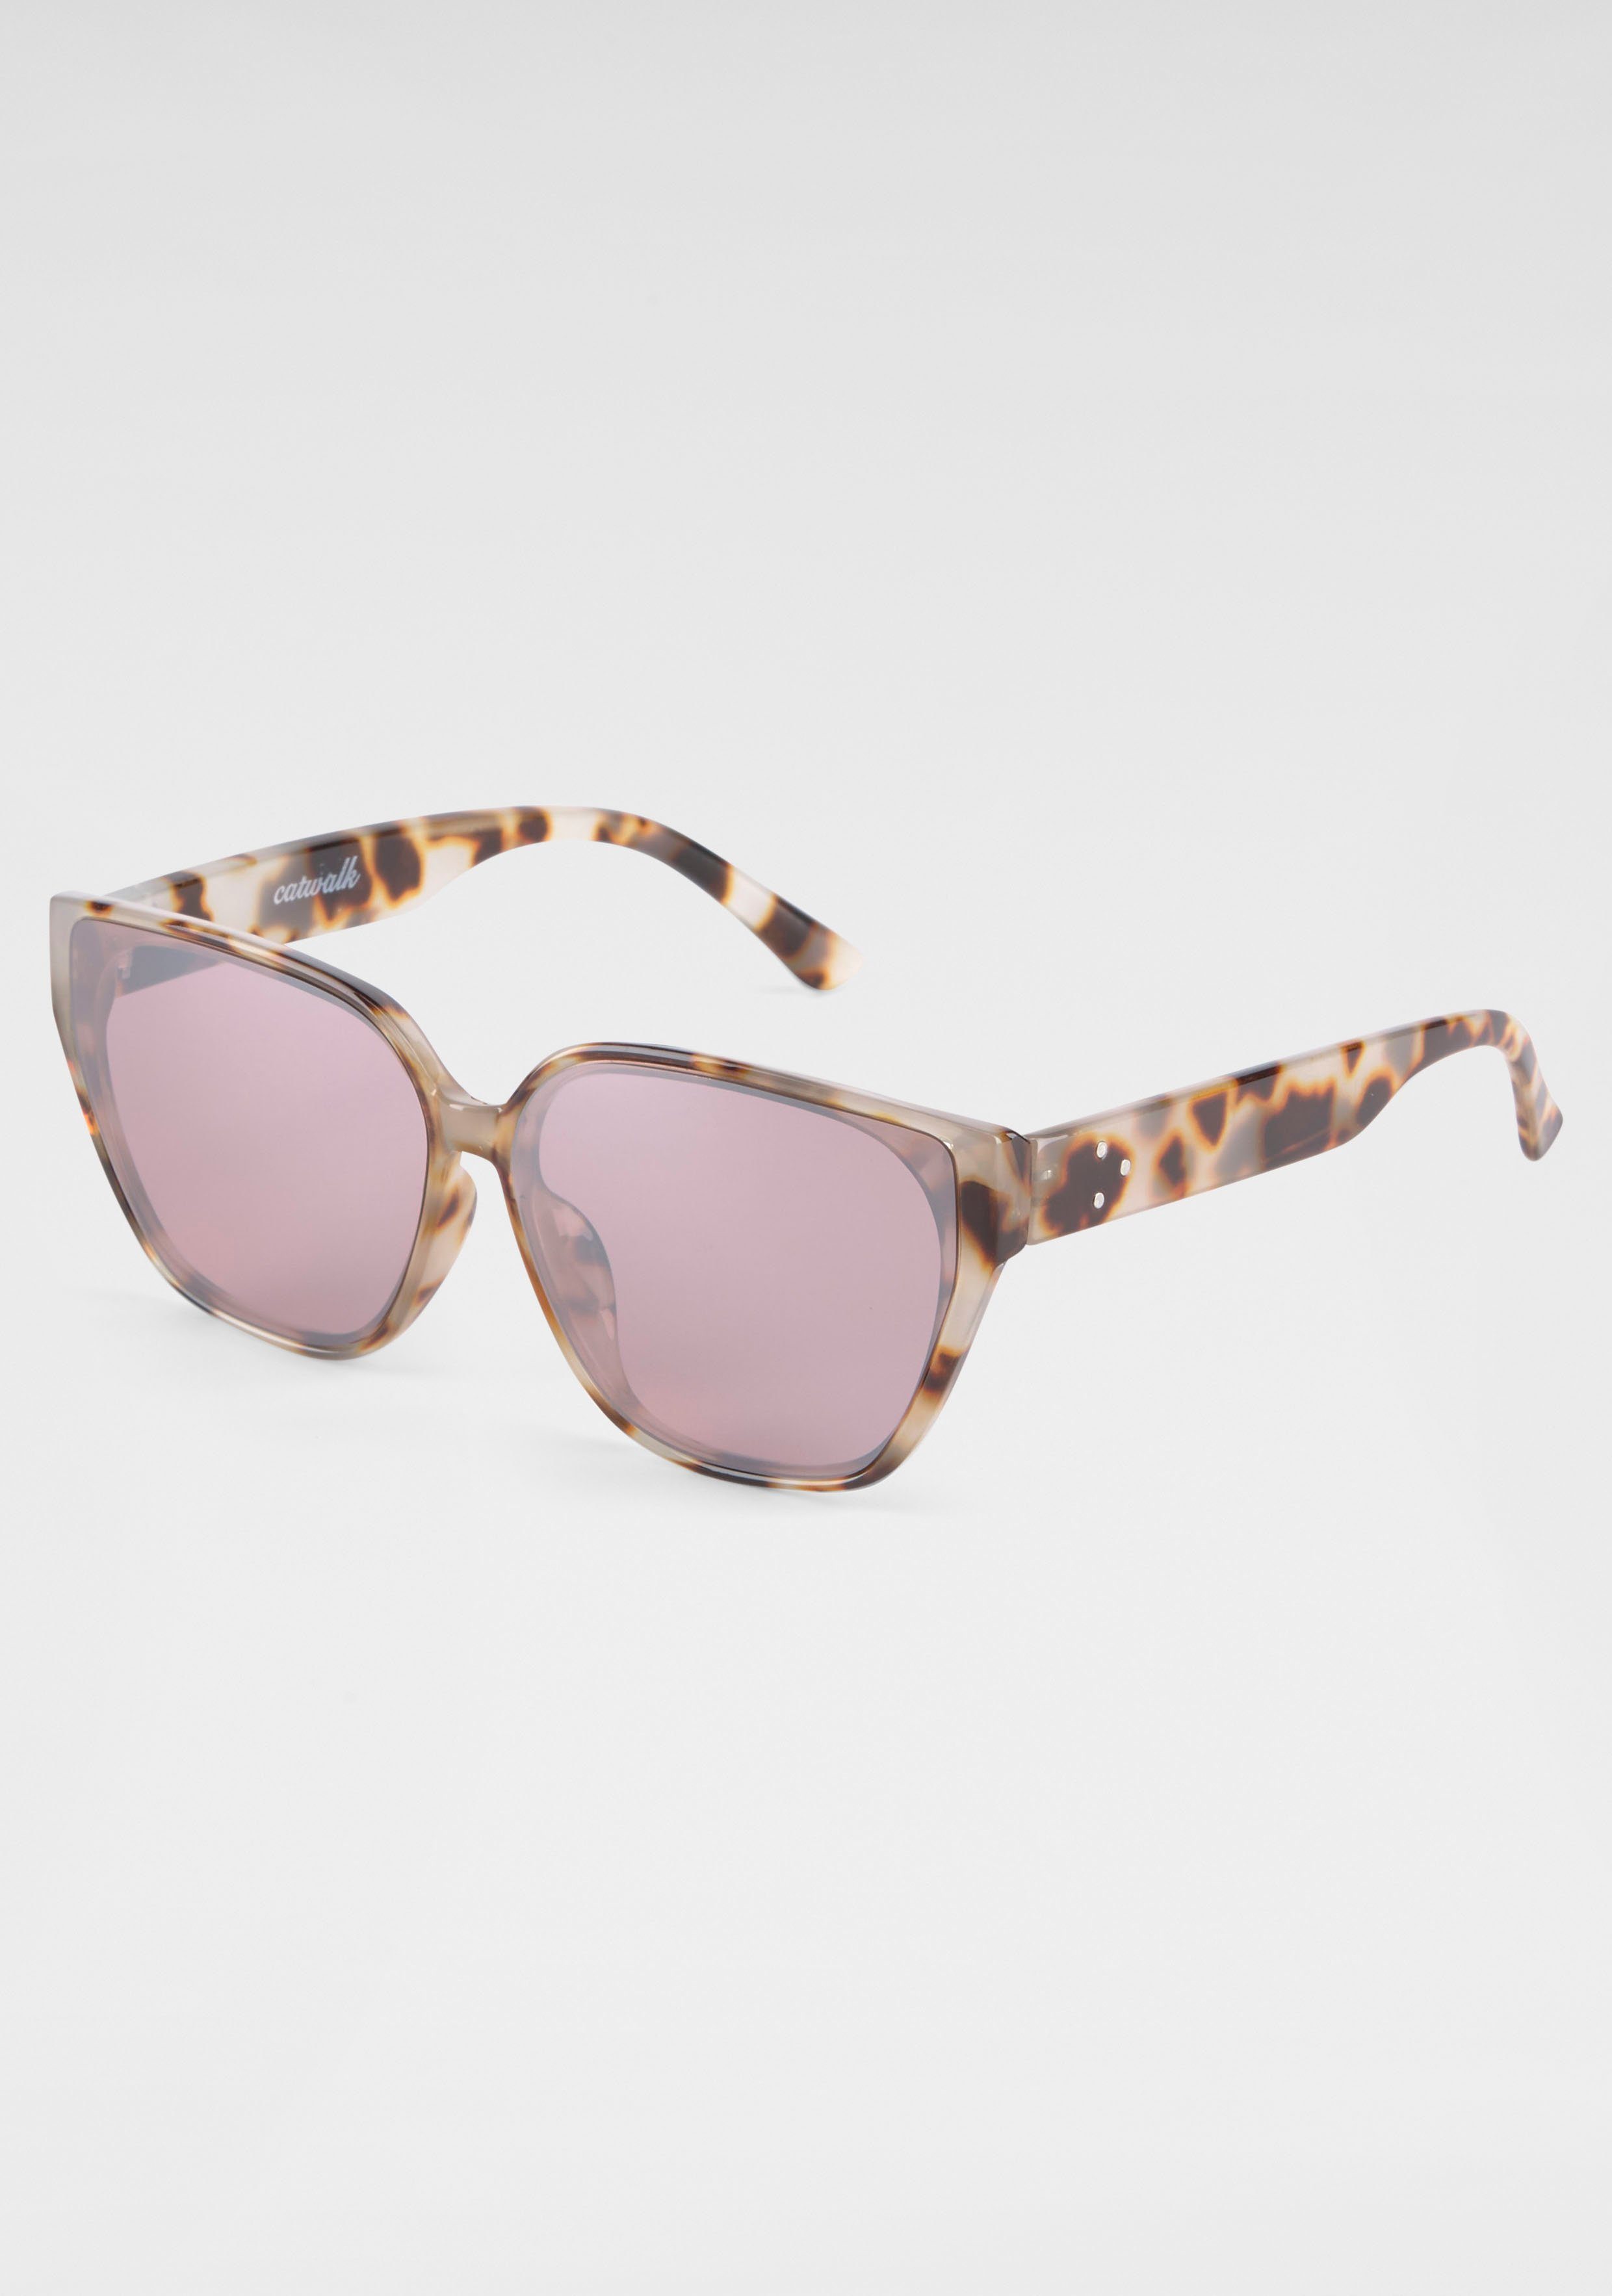 catwalk braun-natur Leo-Optik Sonnenbrille Eyewear